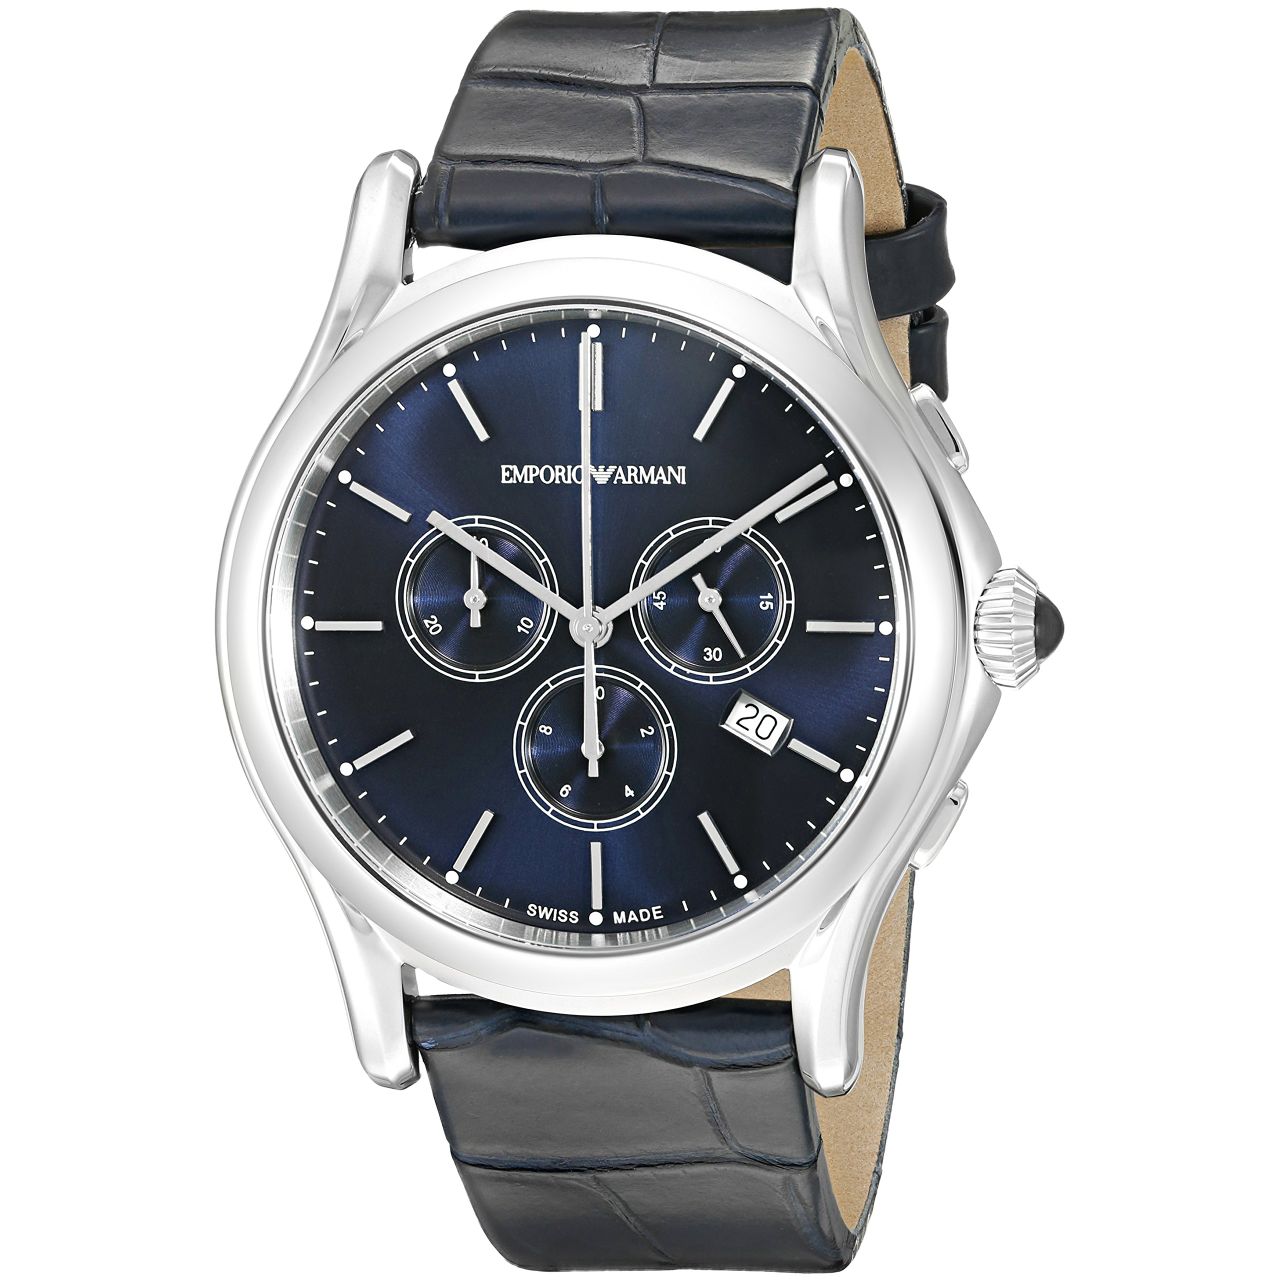 Emporio Armani ARS4010 Mens Blue Dial Analog Quartz Watch with Leather Strap